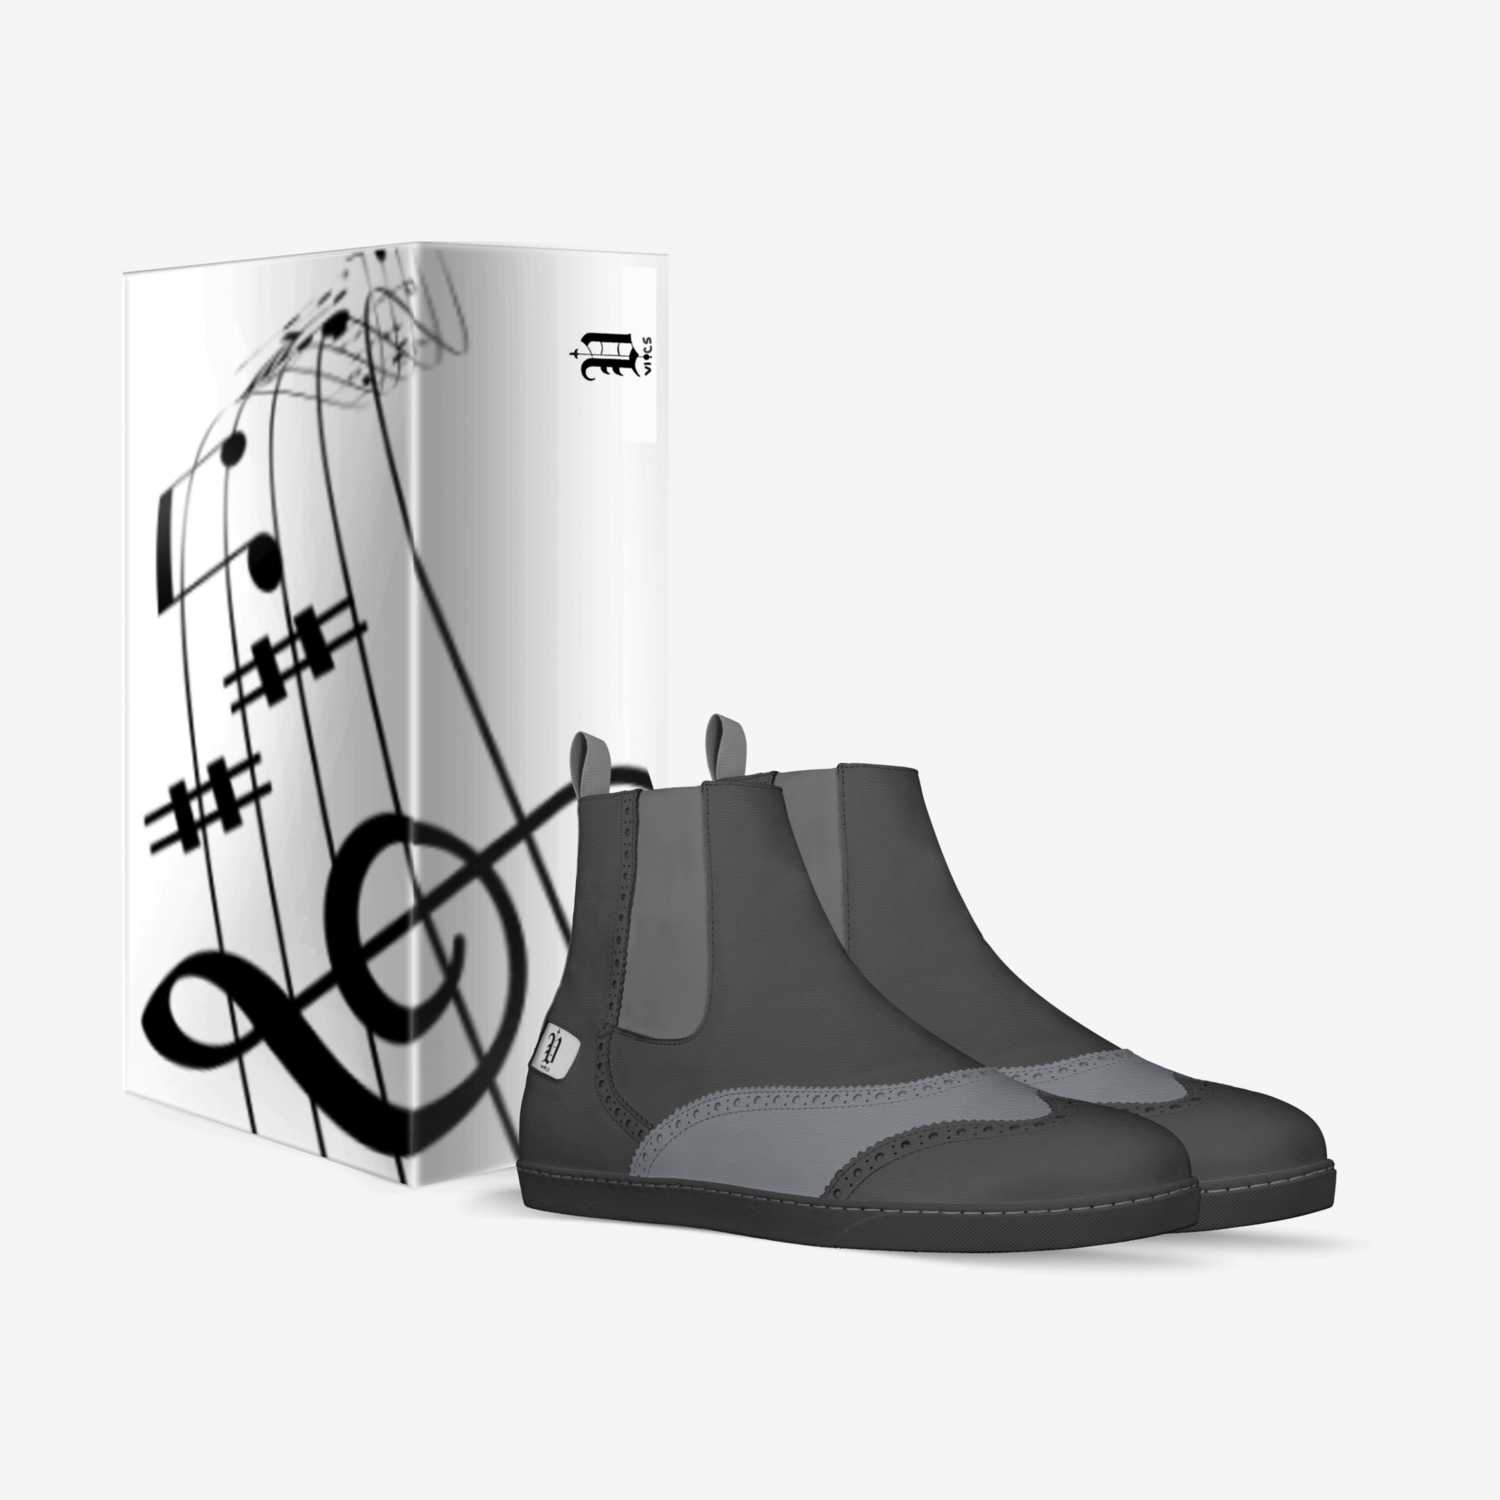 vics passato custom made in Italy shoes by Brayden Murphy | Box view